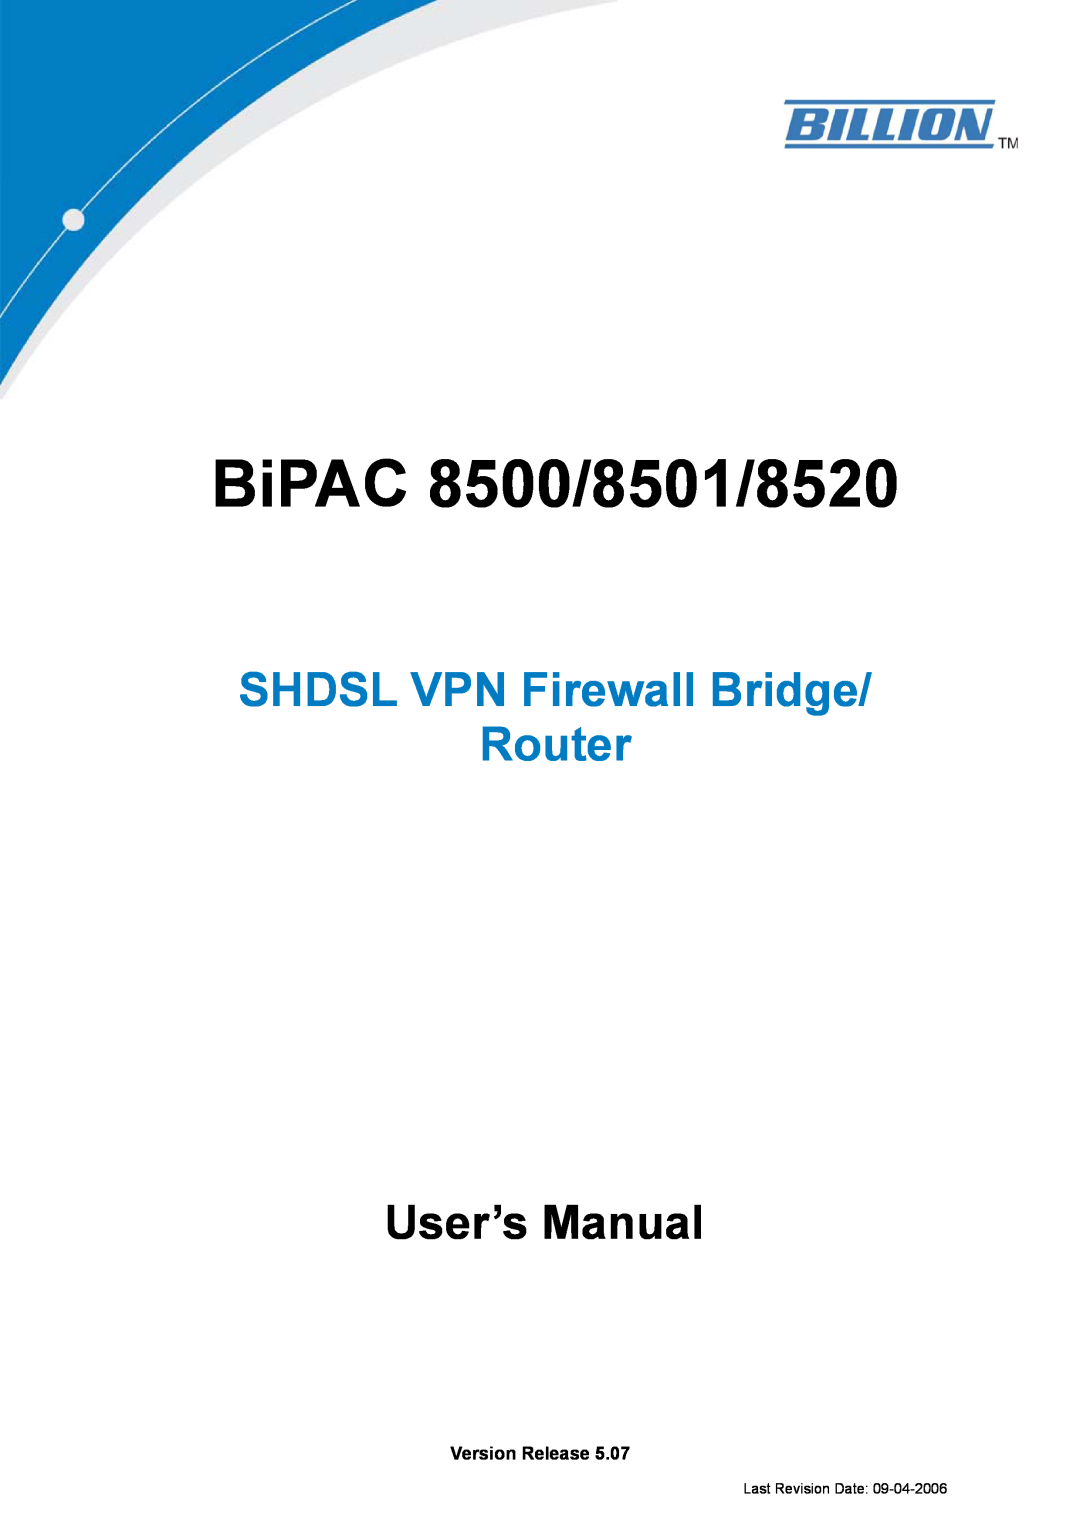 Billion Electric Company user manual BiPAC 8500/8501/8520, SHDSL VPN Firewall Bridge Router, User’s Manual 